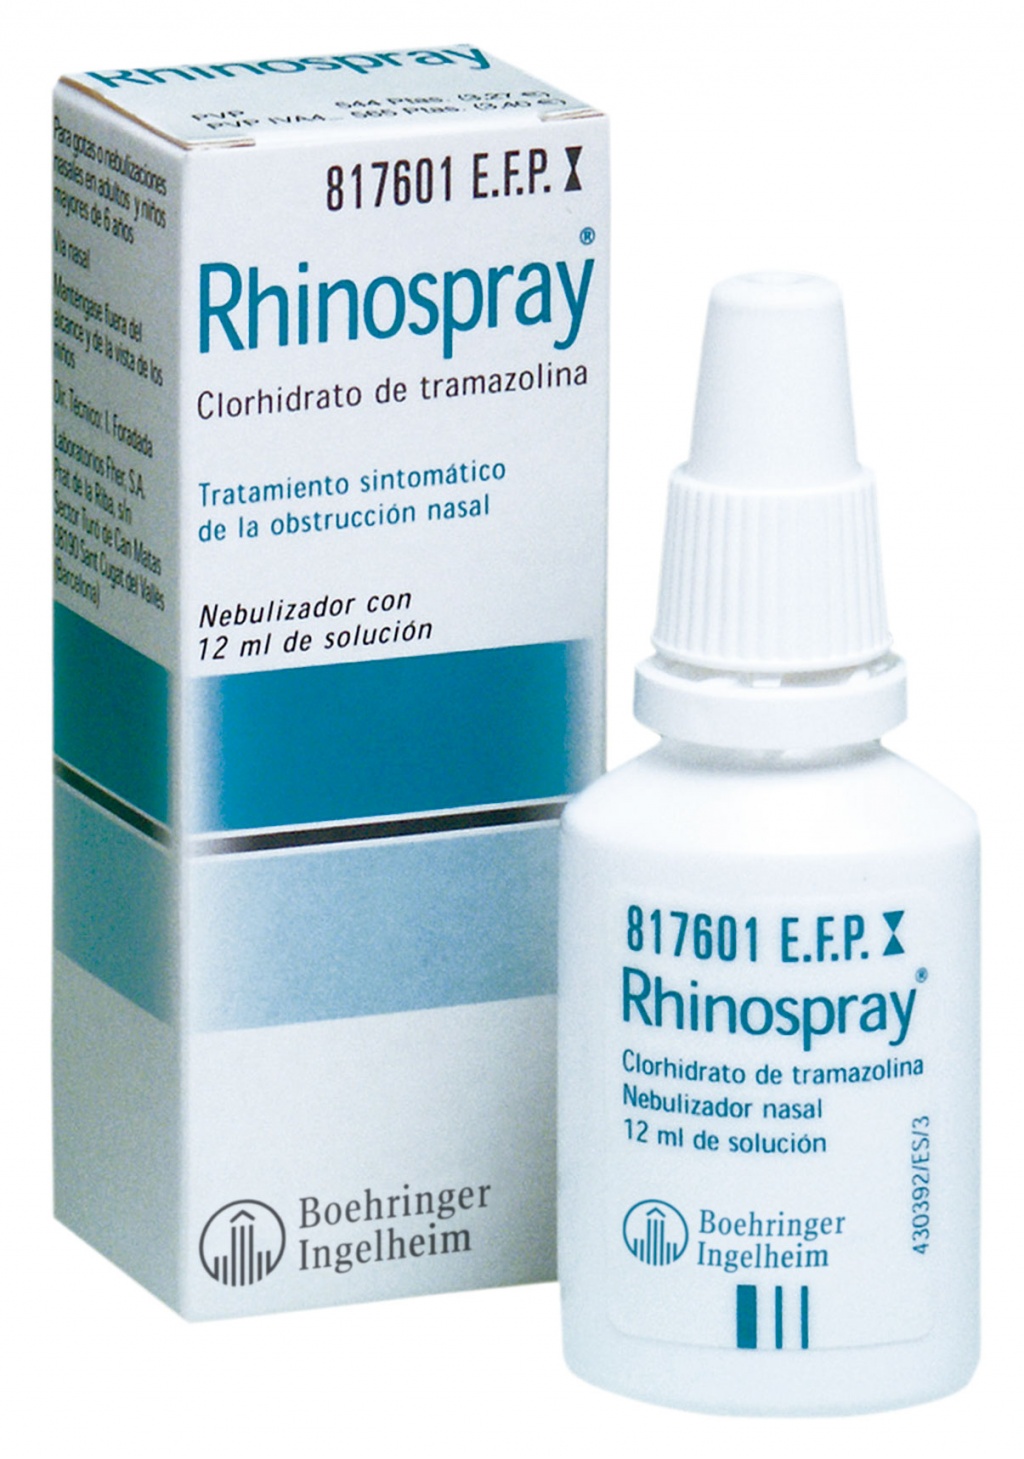 Rhinospray nebulizador nasal 12 ml